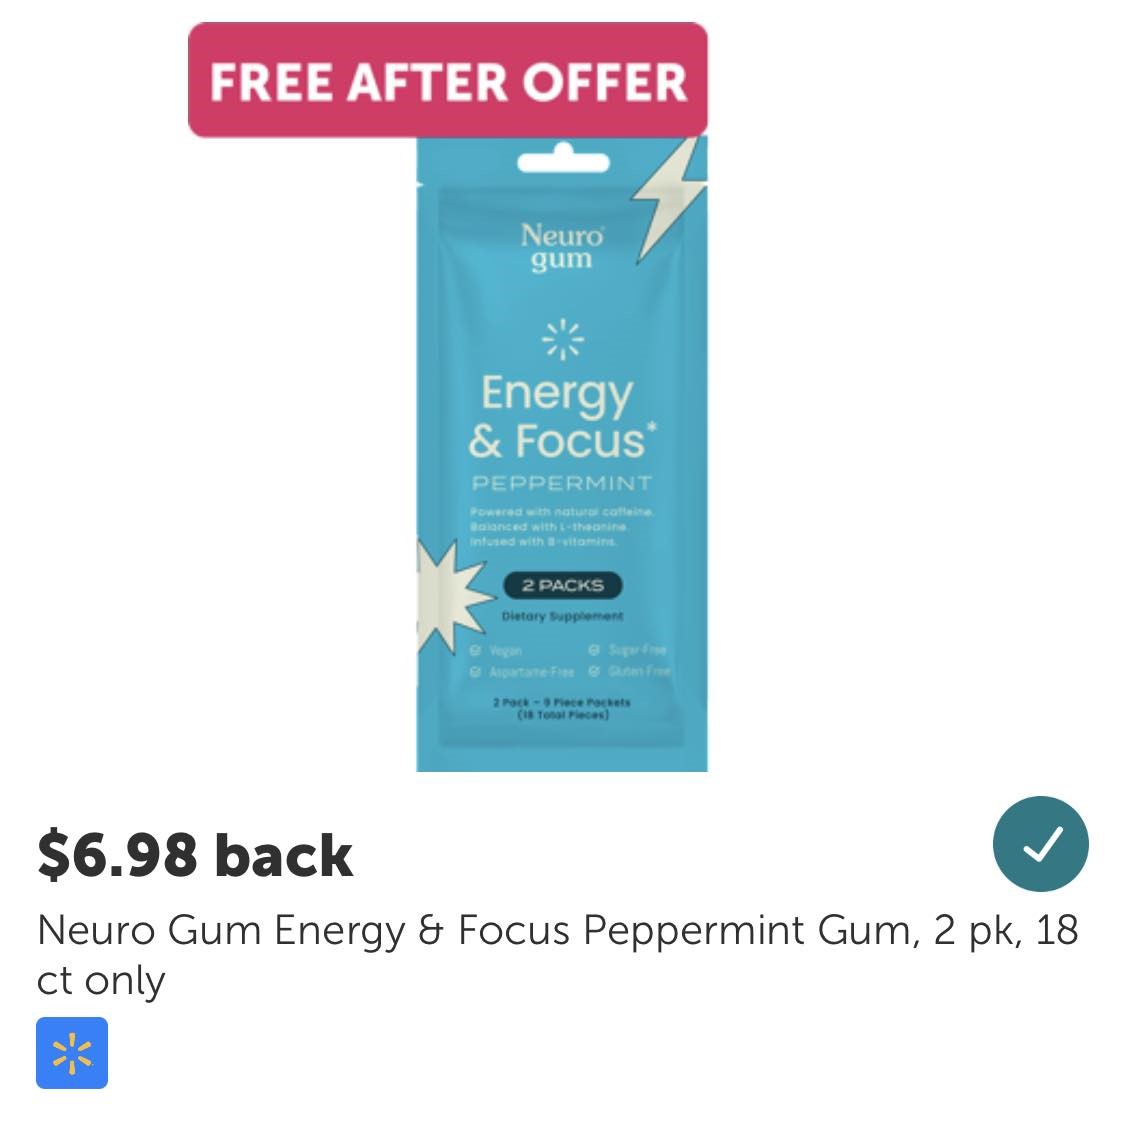 Free Neuro Gum Energy & Focus Peppermint Gum at Walmart